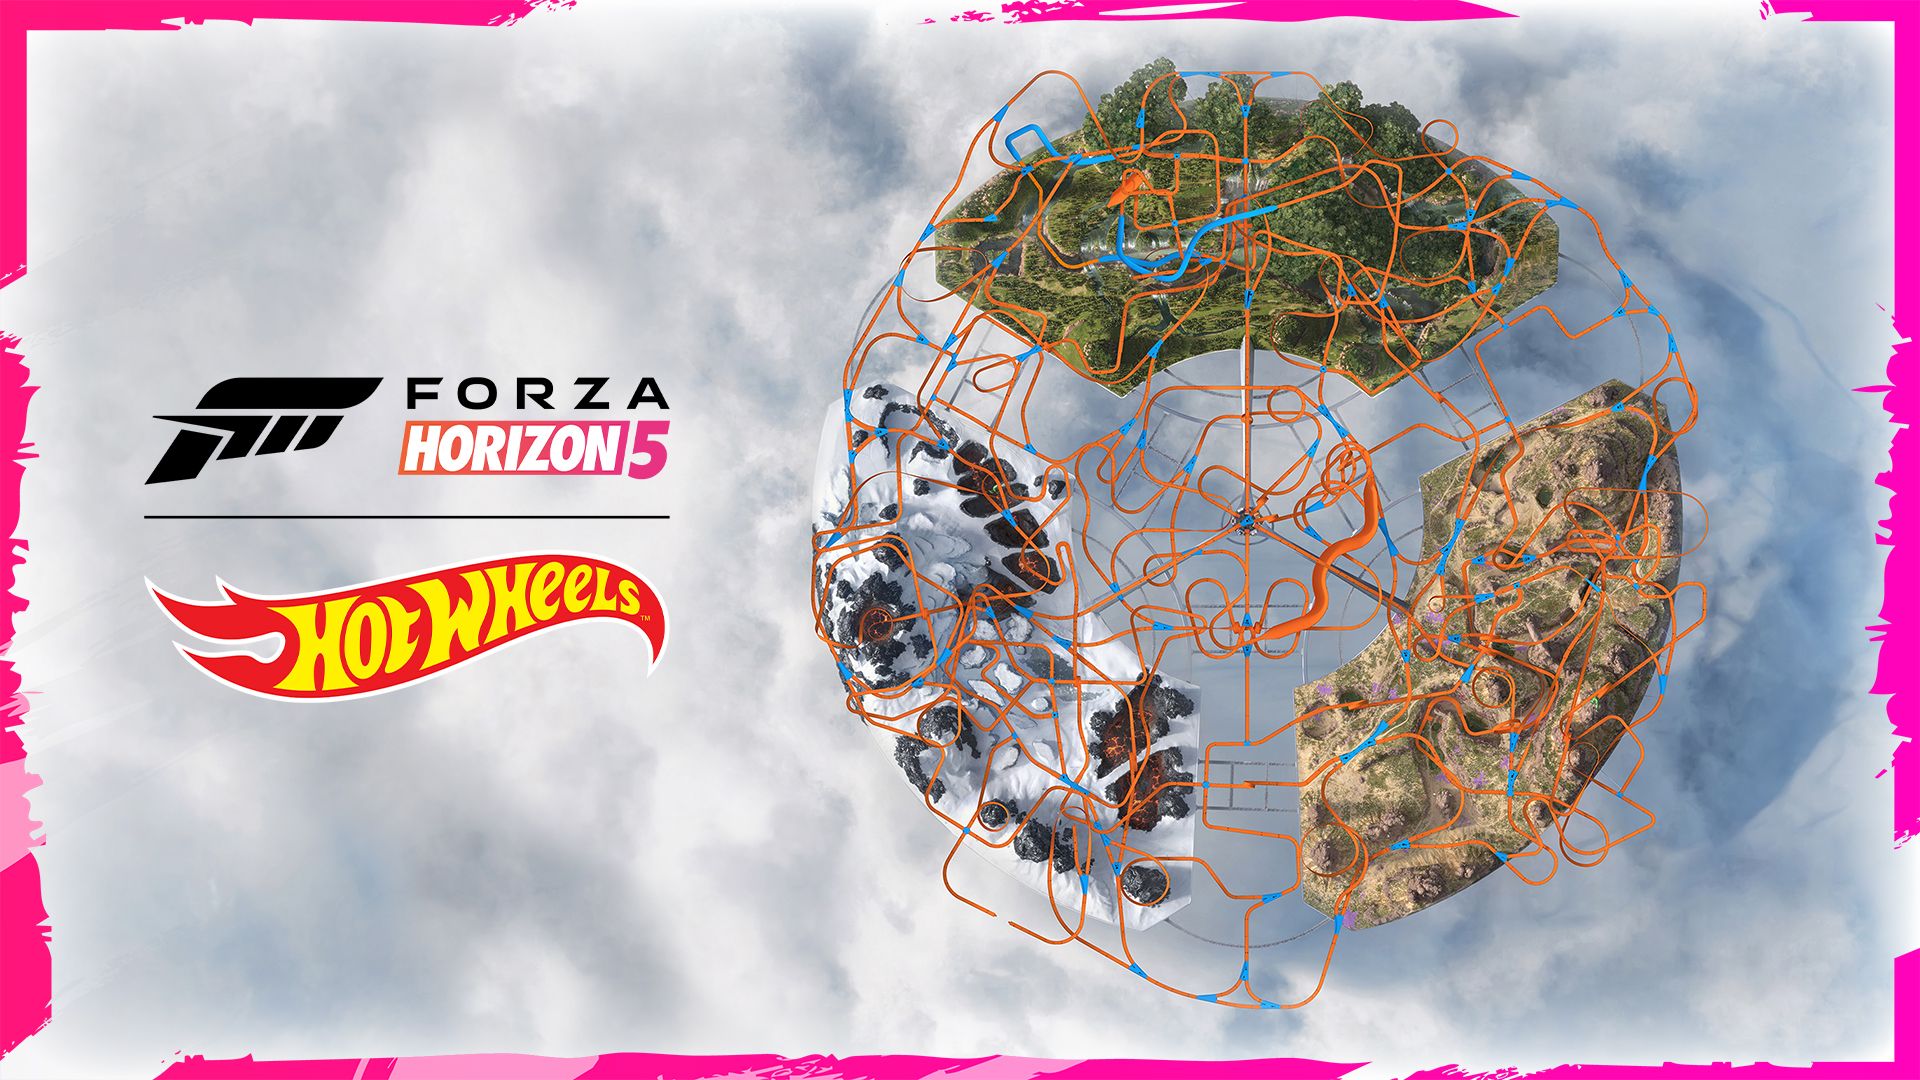 Forza Horizon 5: Hot Wheels – Launch Gallery